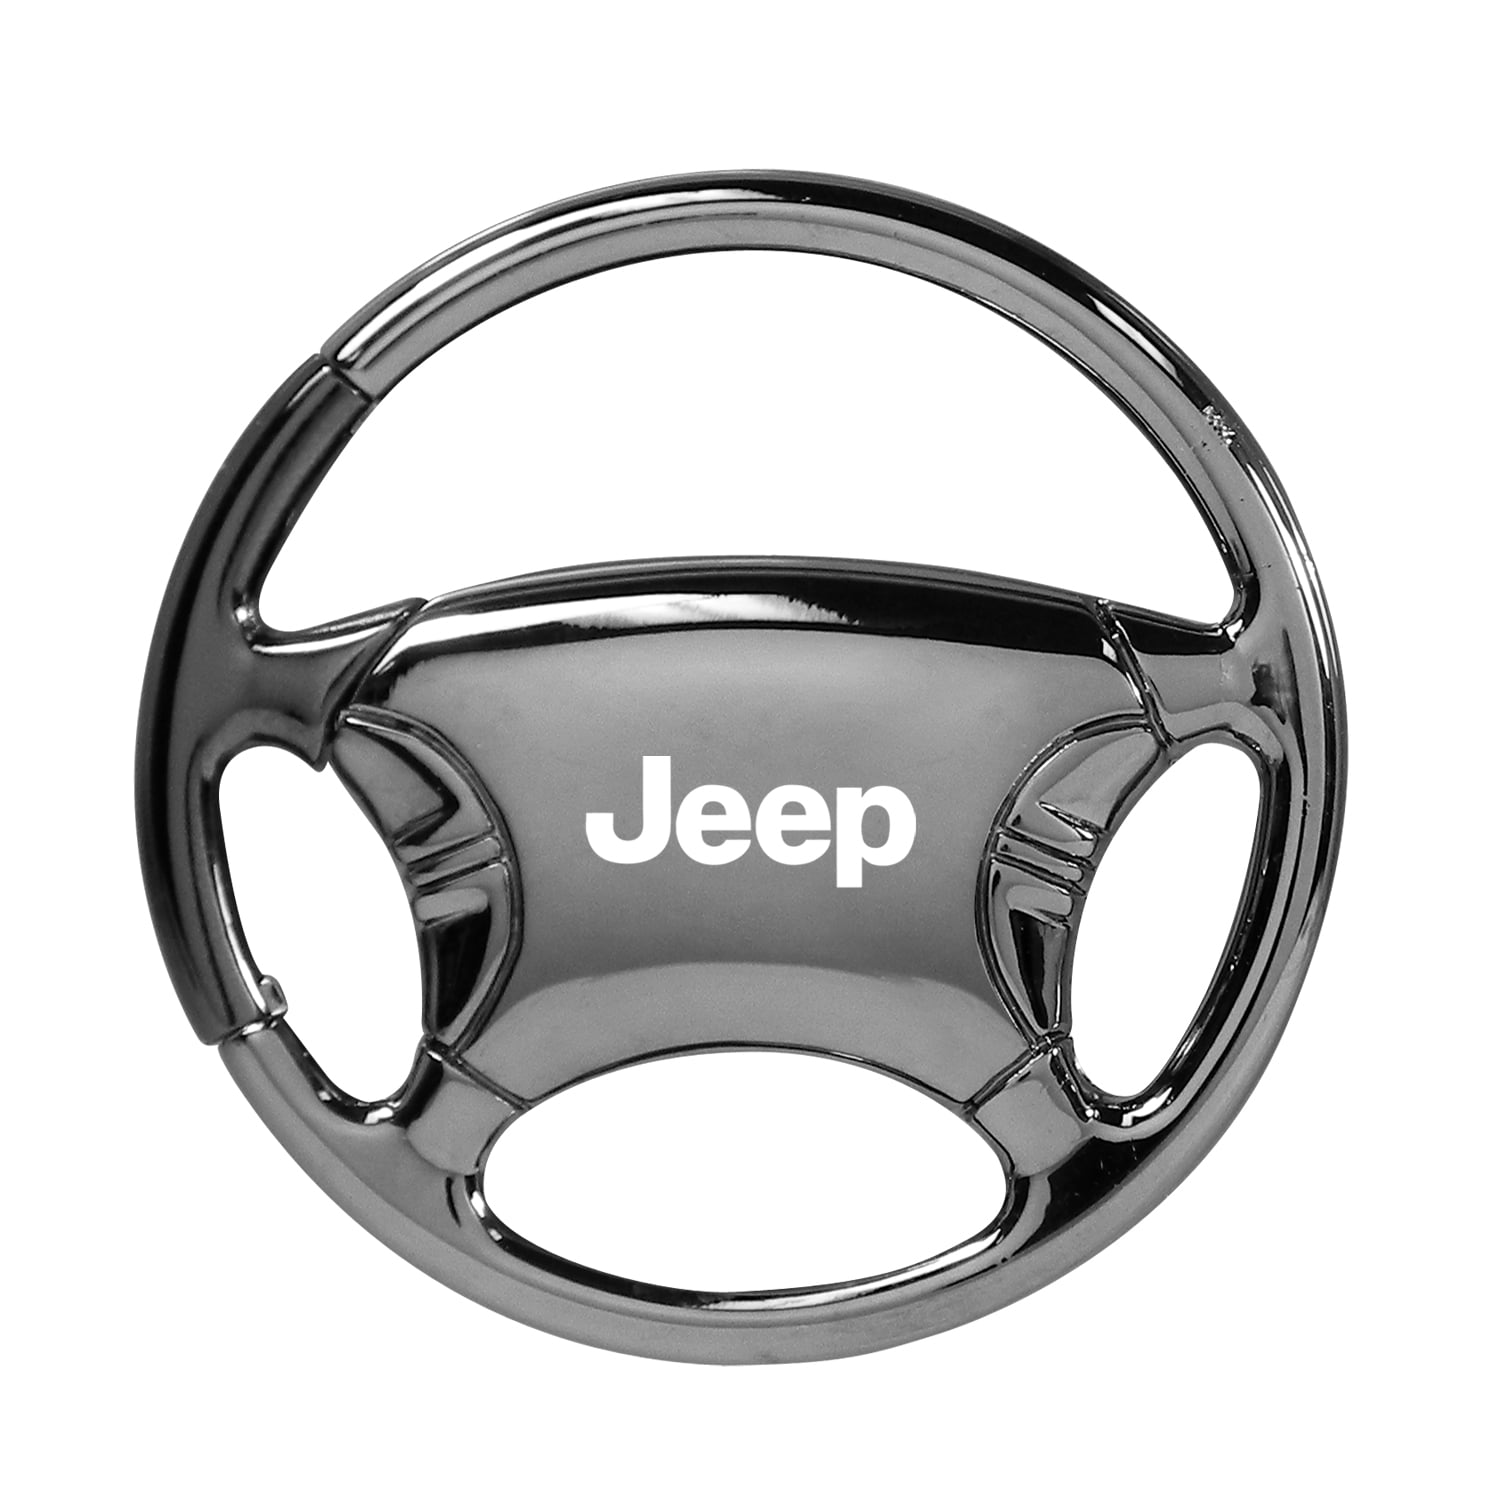 Jeep Wrangler Steering Wheel Key Chain Key-ring Keychain Keyfob